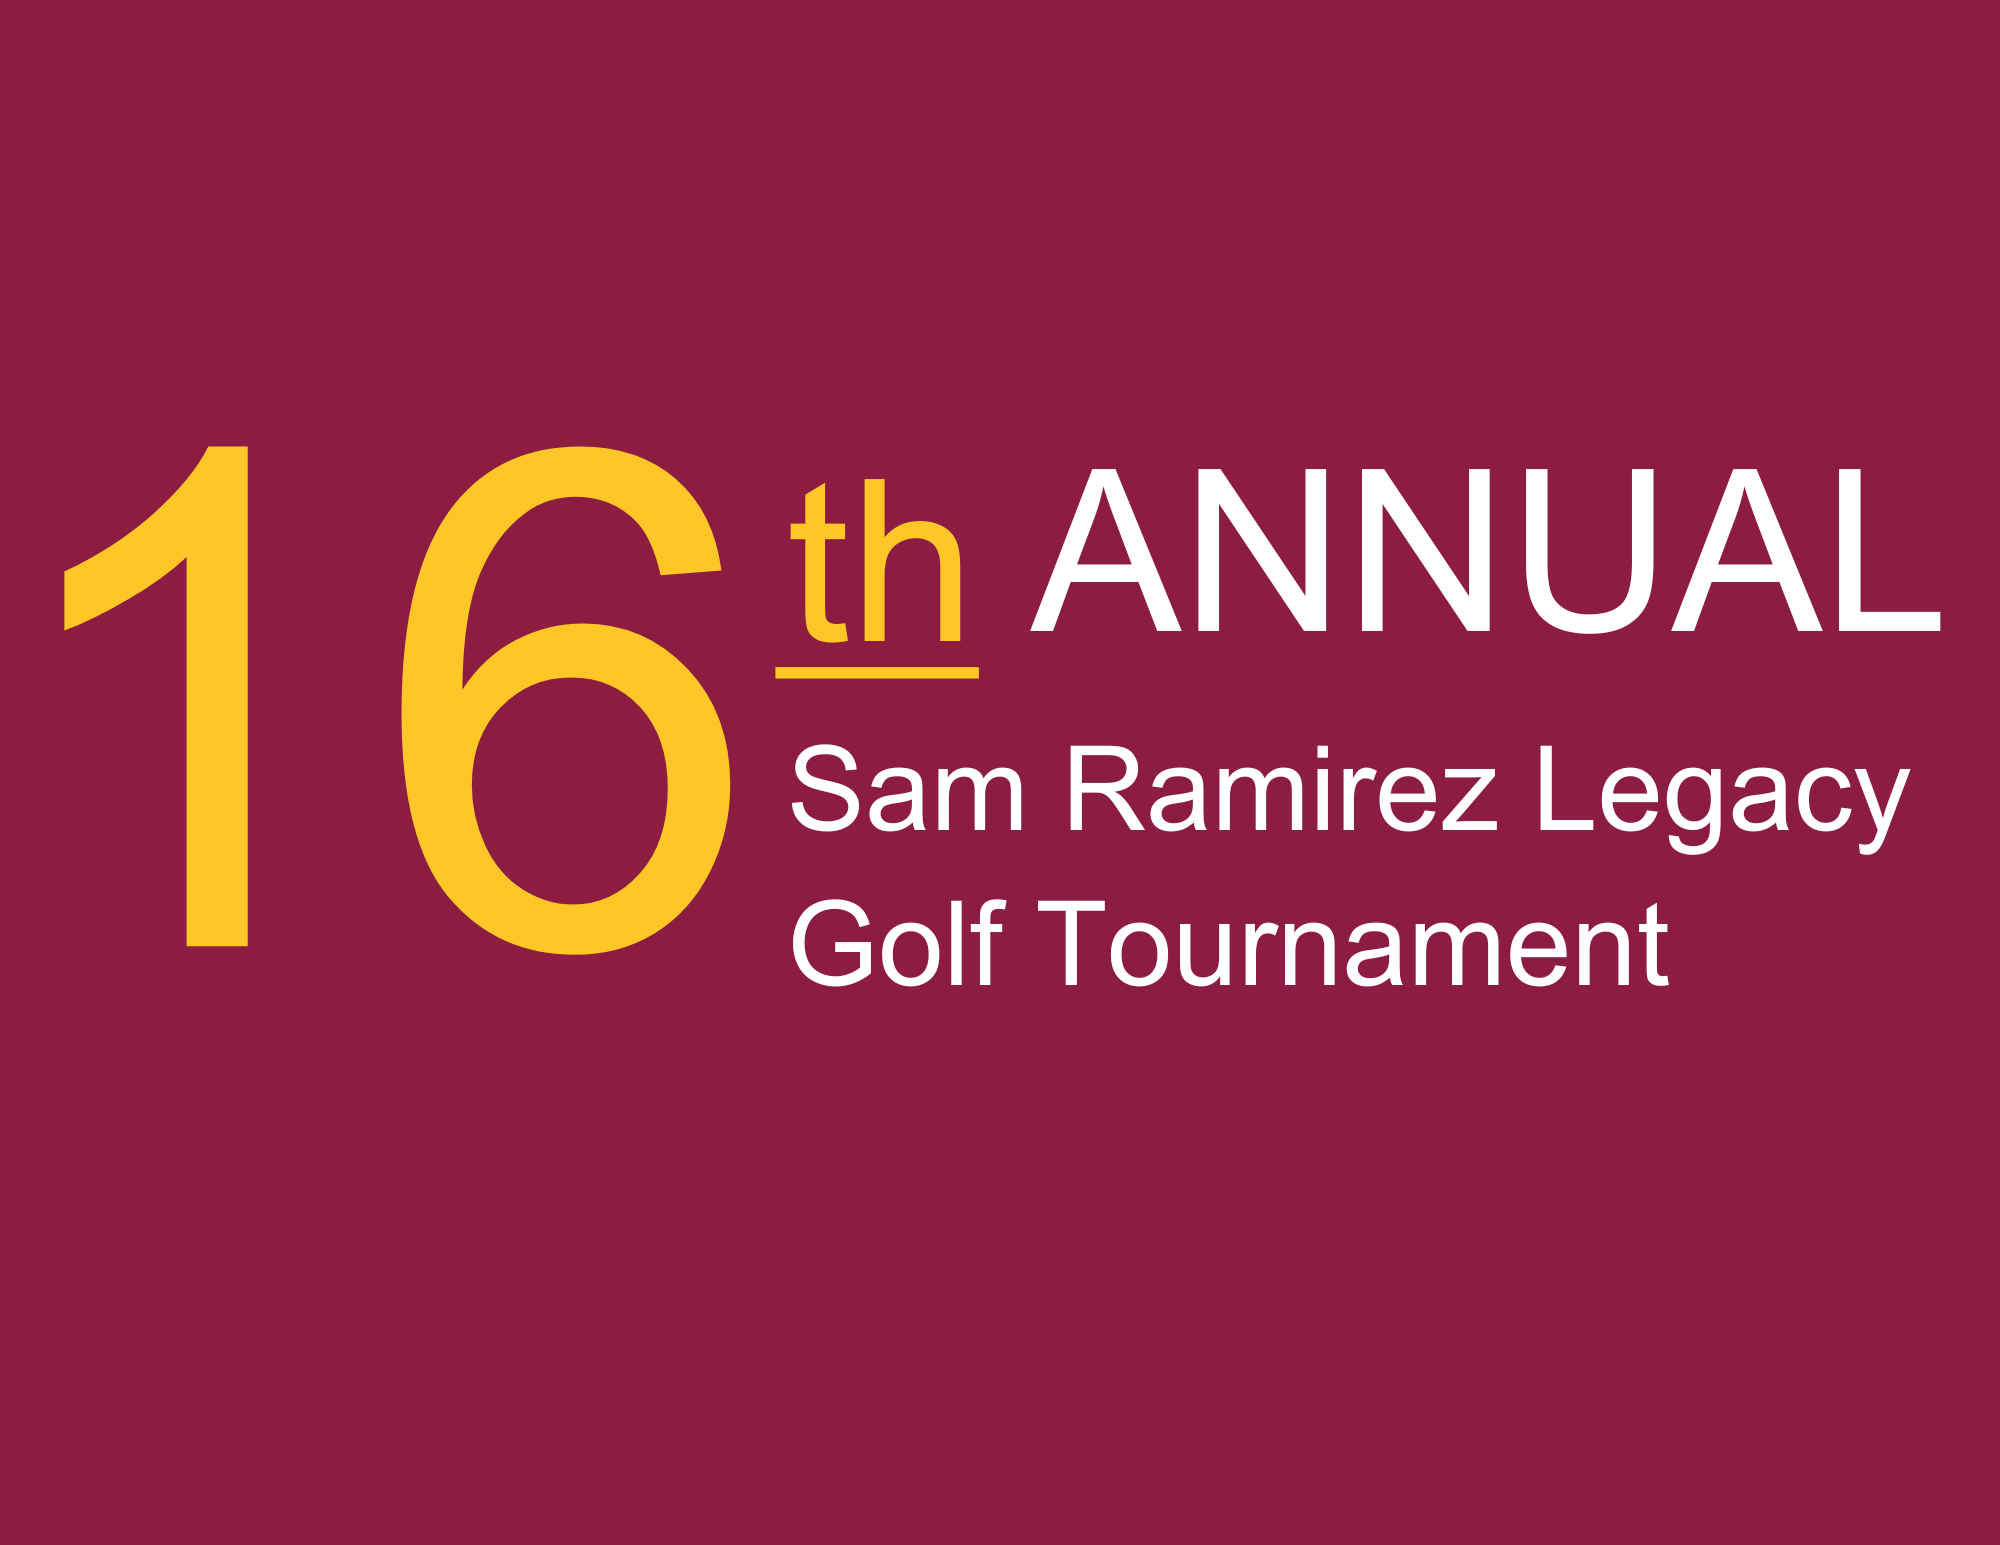 16th Annual Los Diablos Sam Ramirez Legacy Golf Tournament